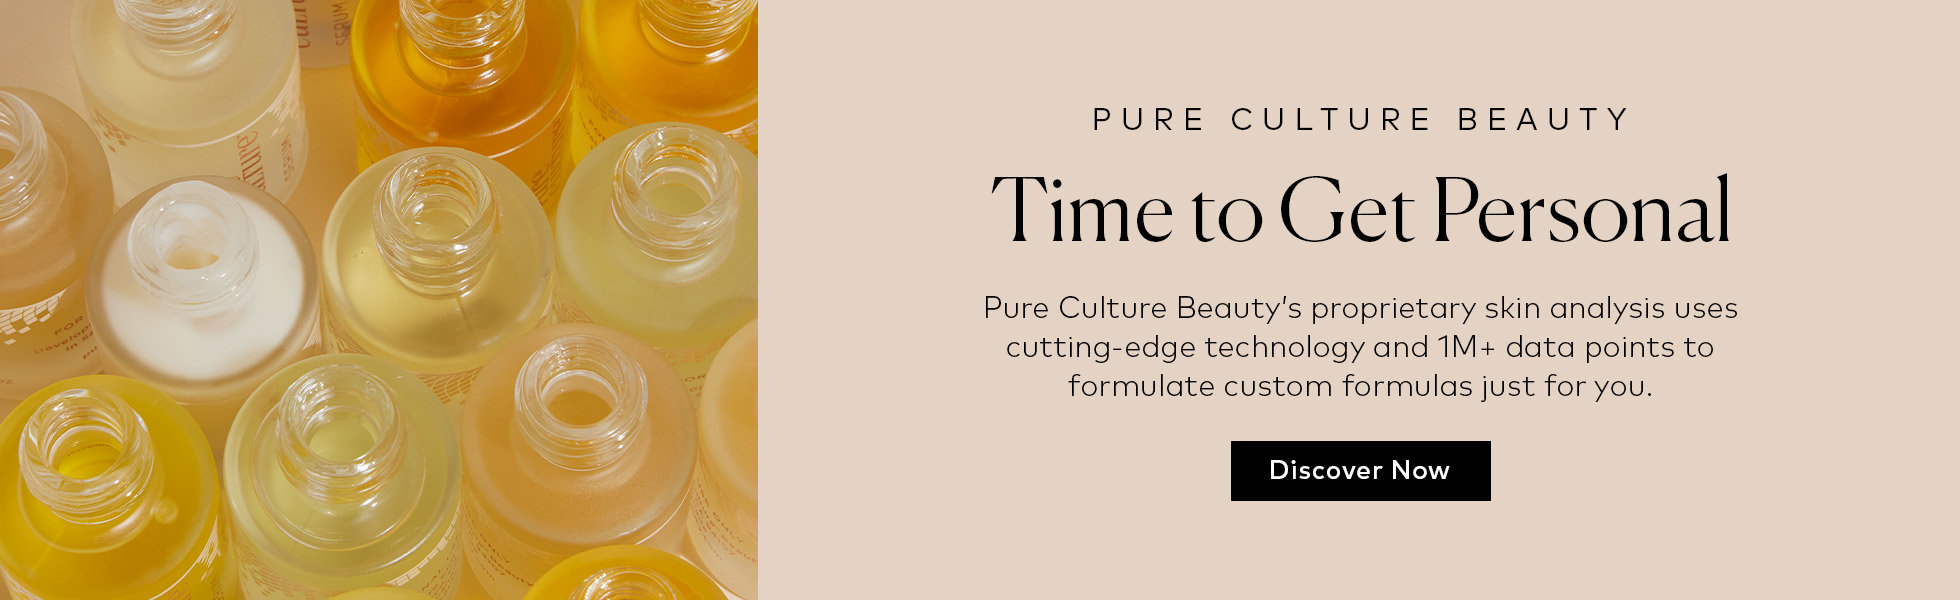 Discover Pure Culture Beauty at Beautylish.com